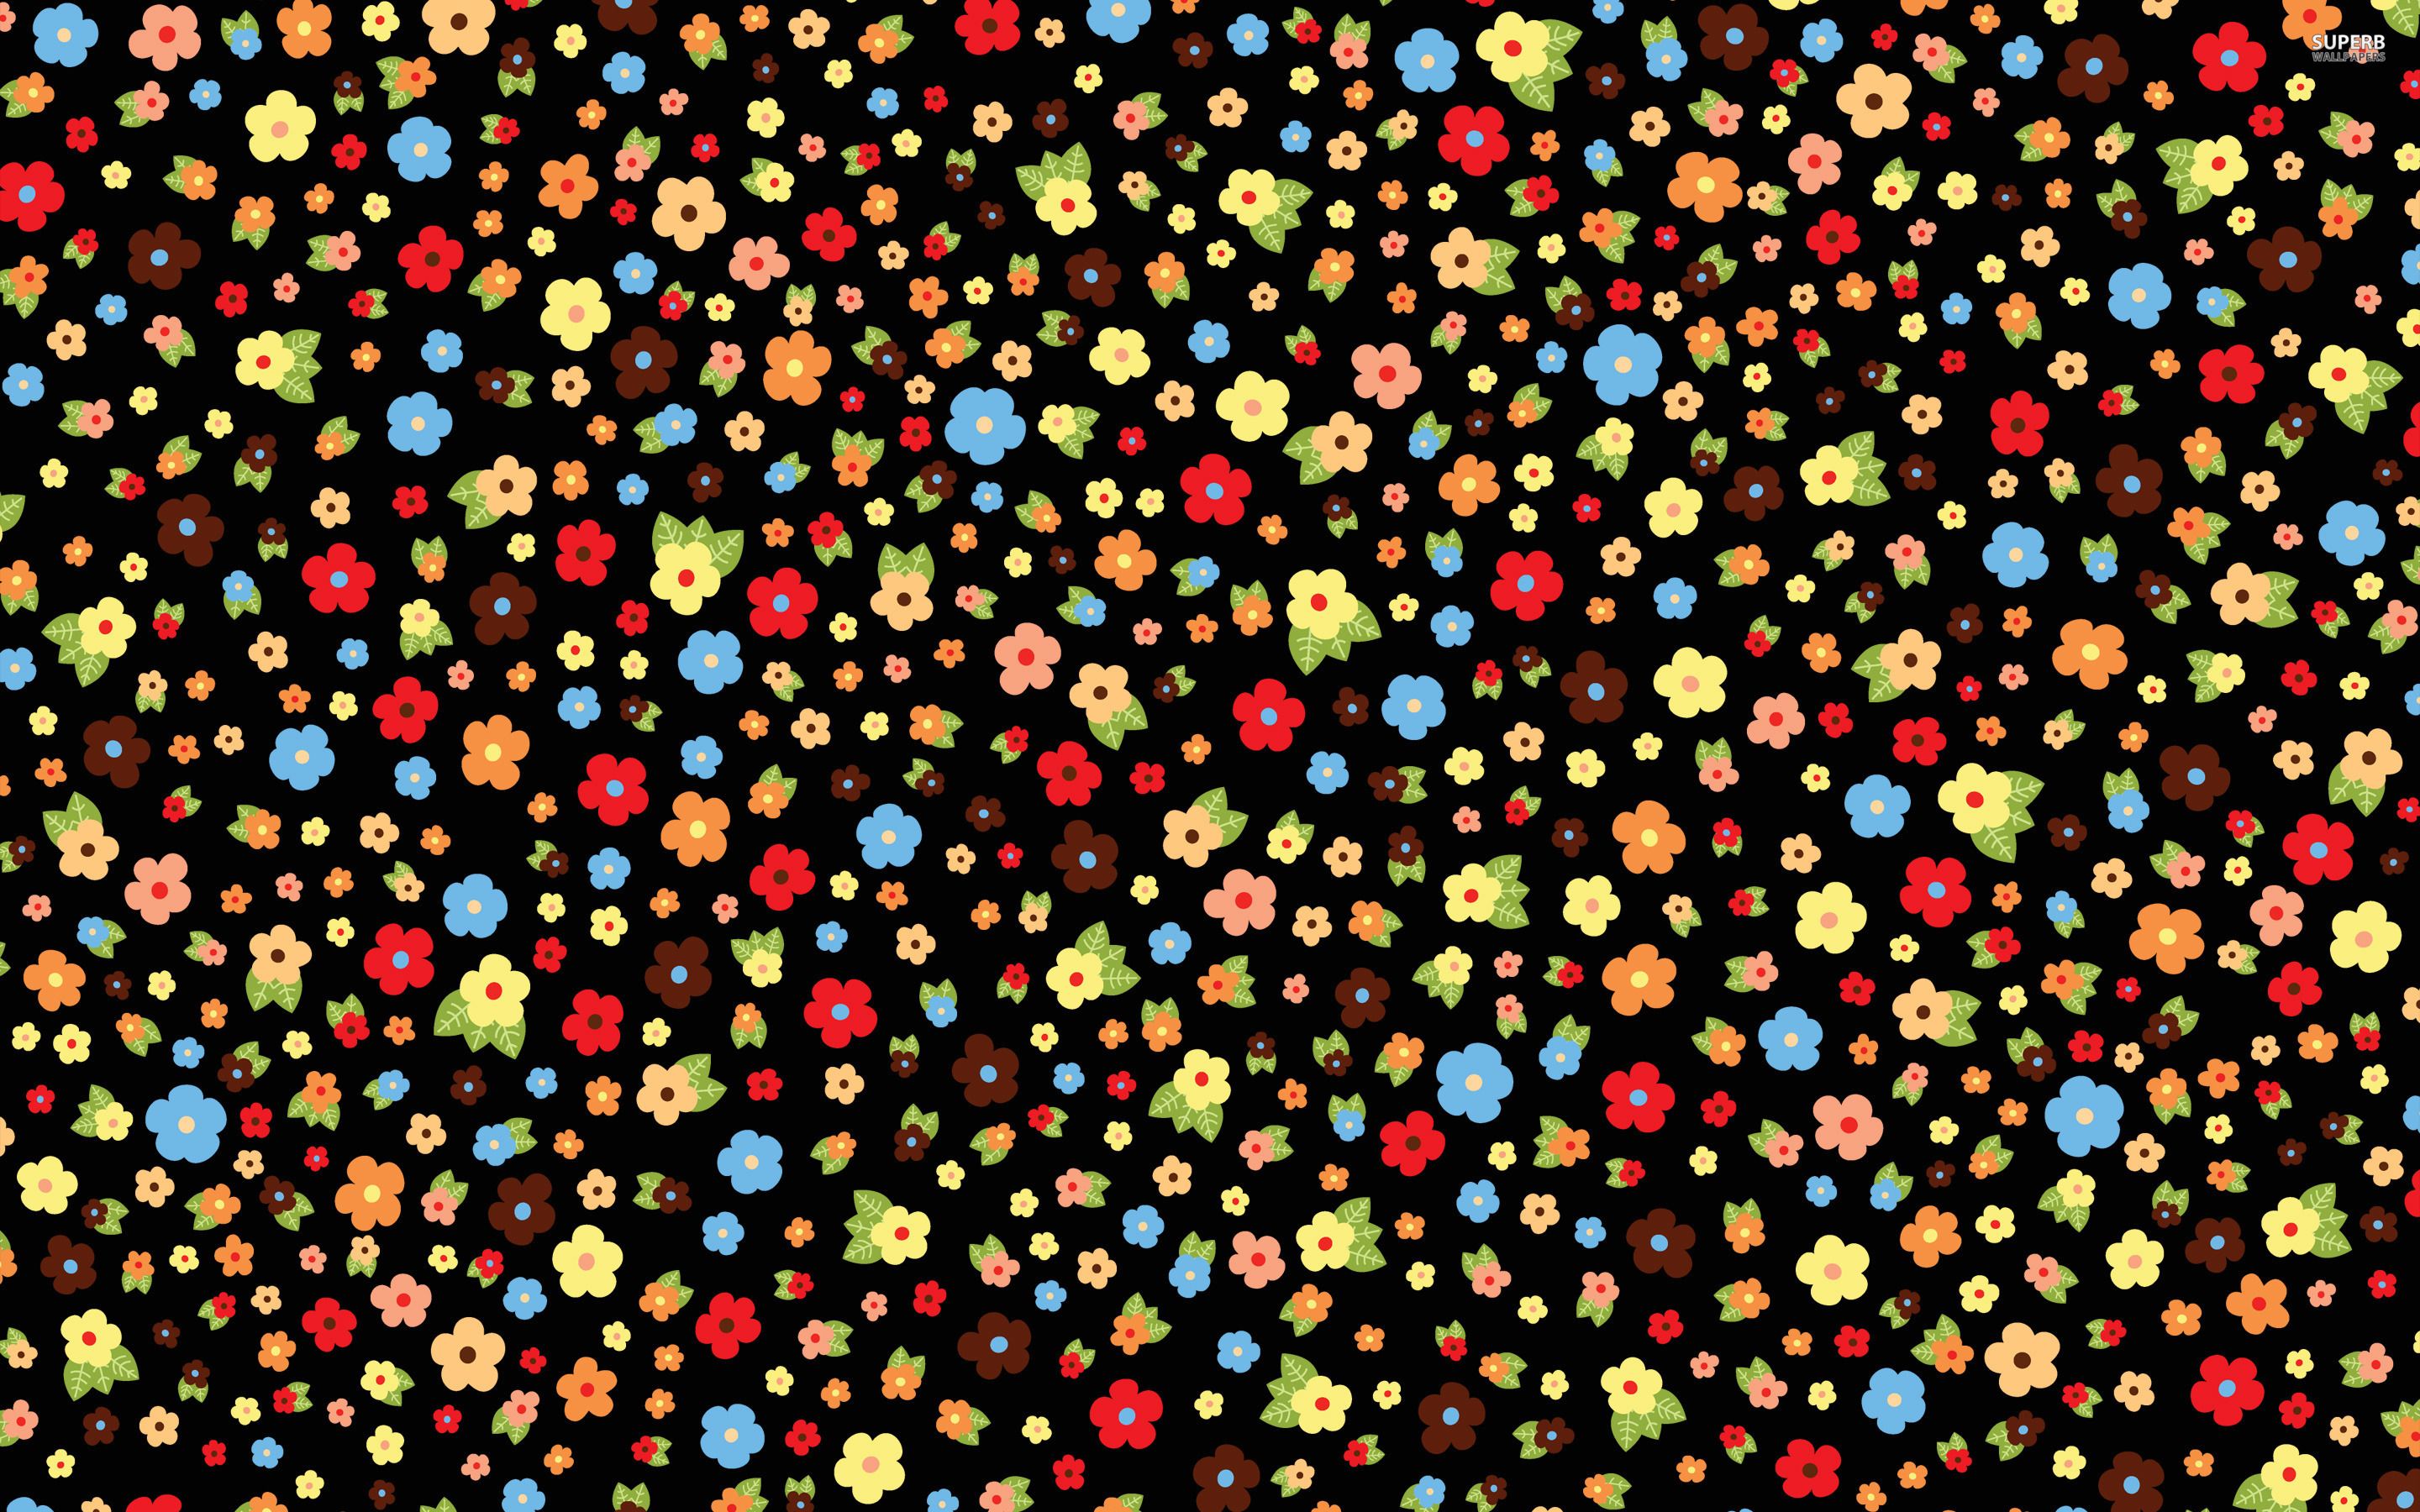 Rainbow diamond pattern wallpaper - Digital Art wallpapers - #24898